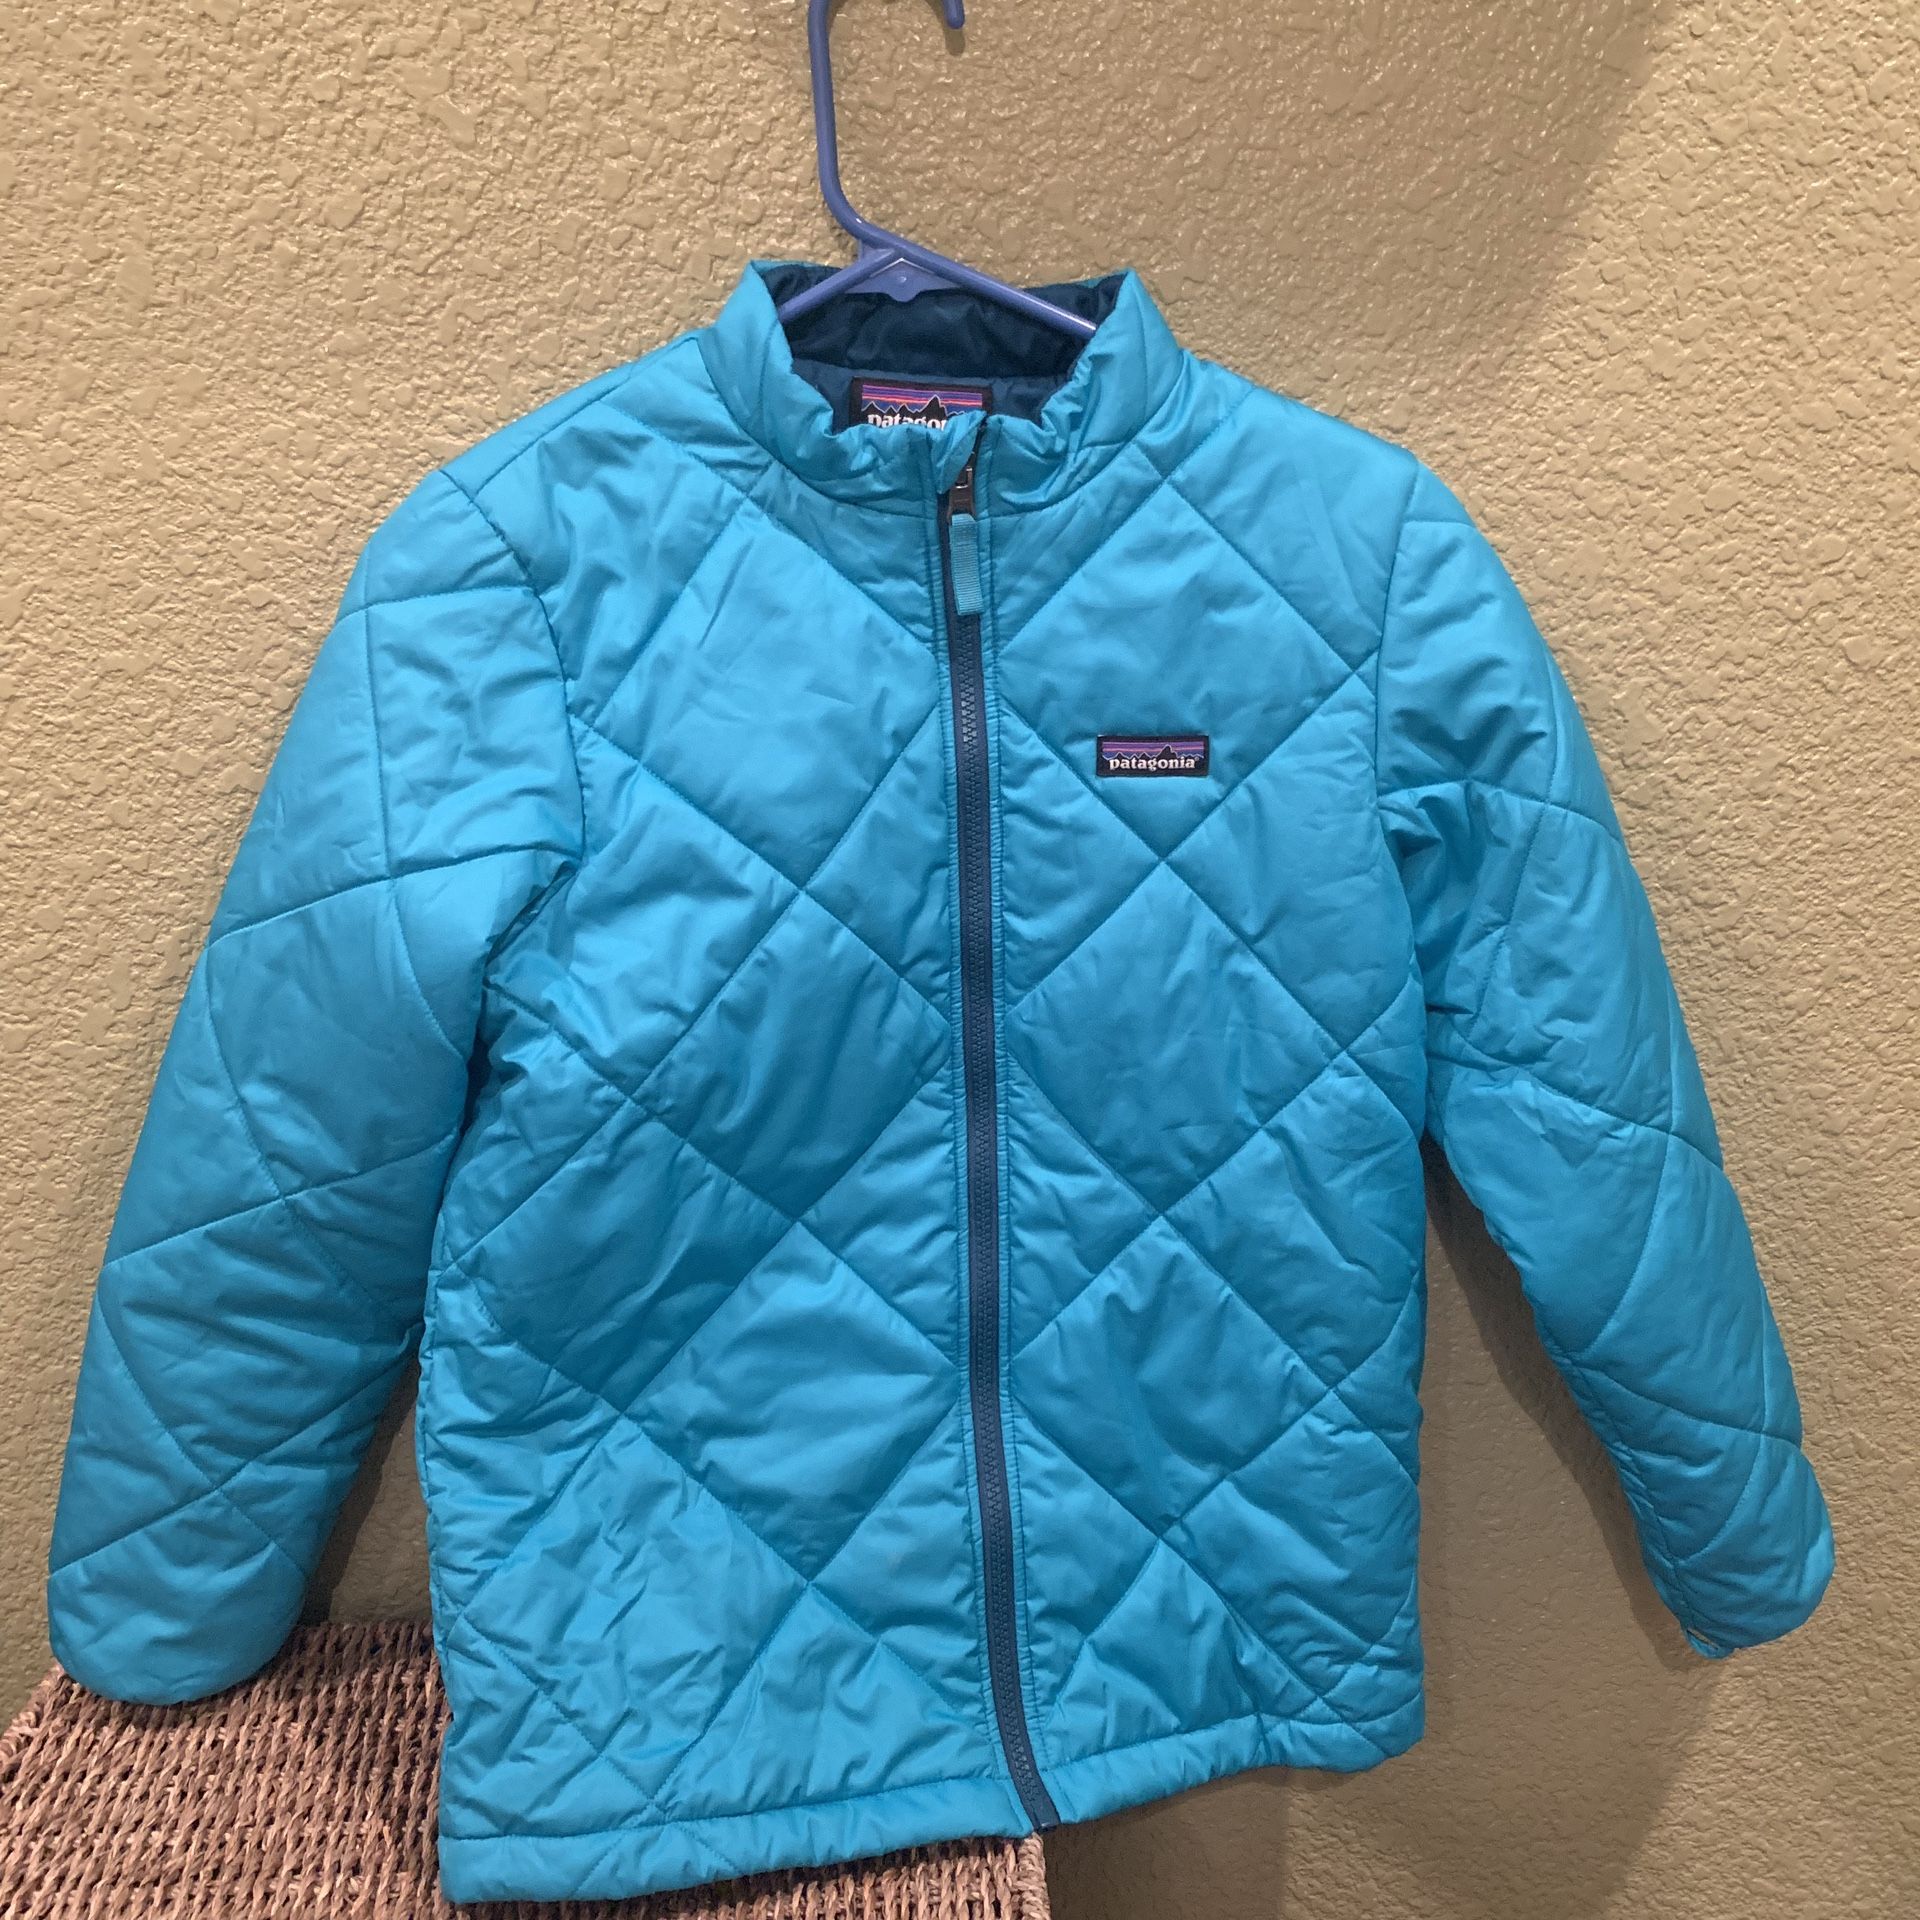 Patagonia Size Small Turquoise Nano Puff Jacket